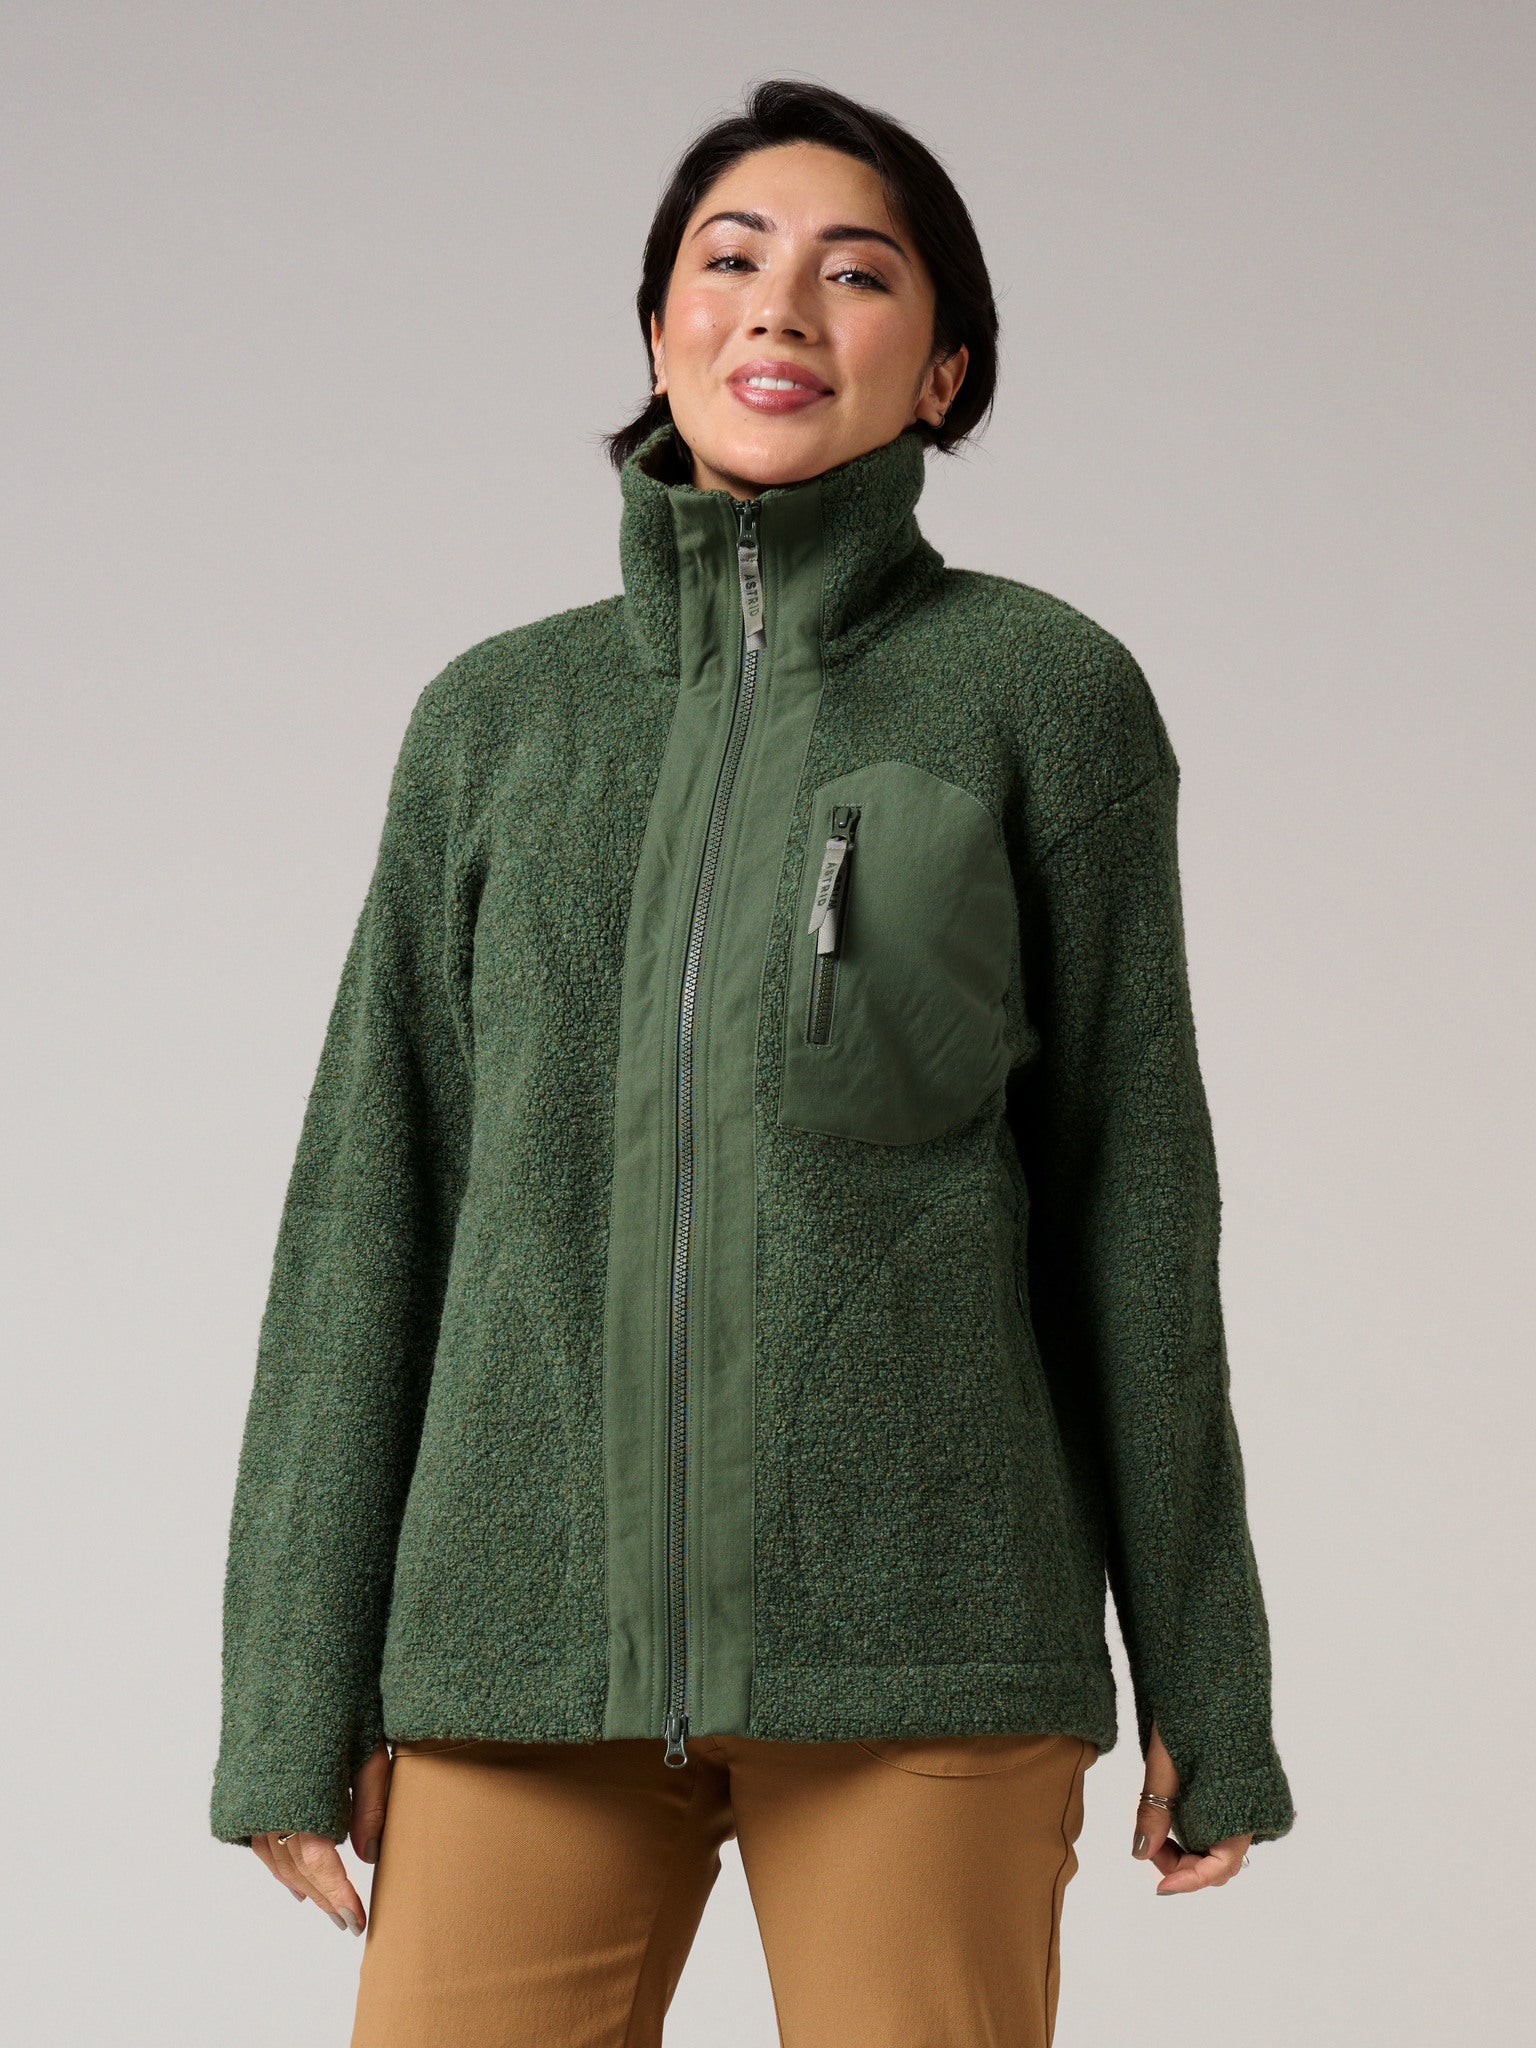 Size 24 Fleece Jackets, Women's Fleeces